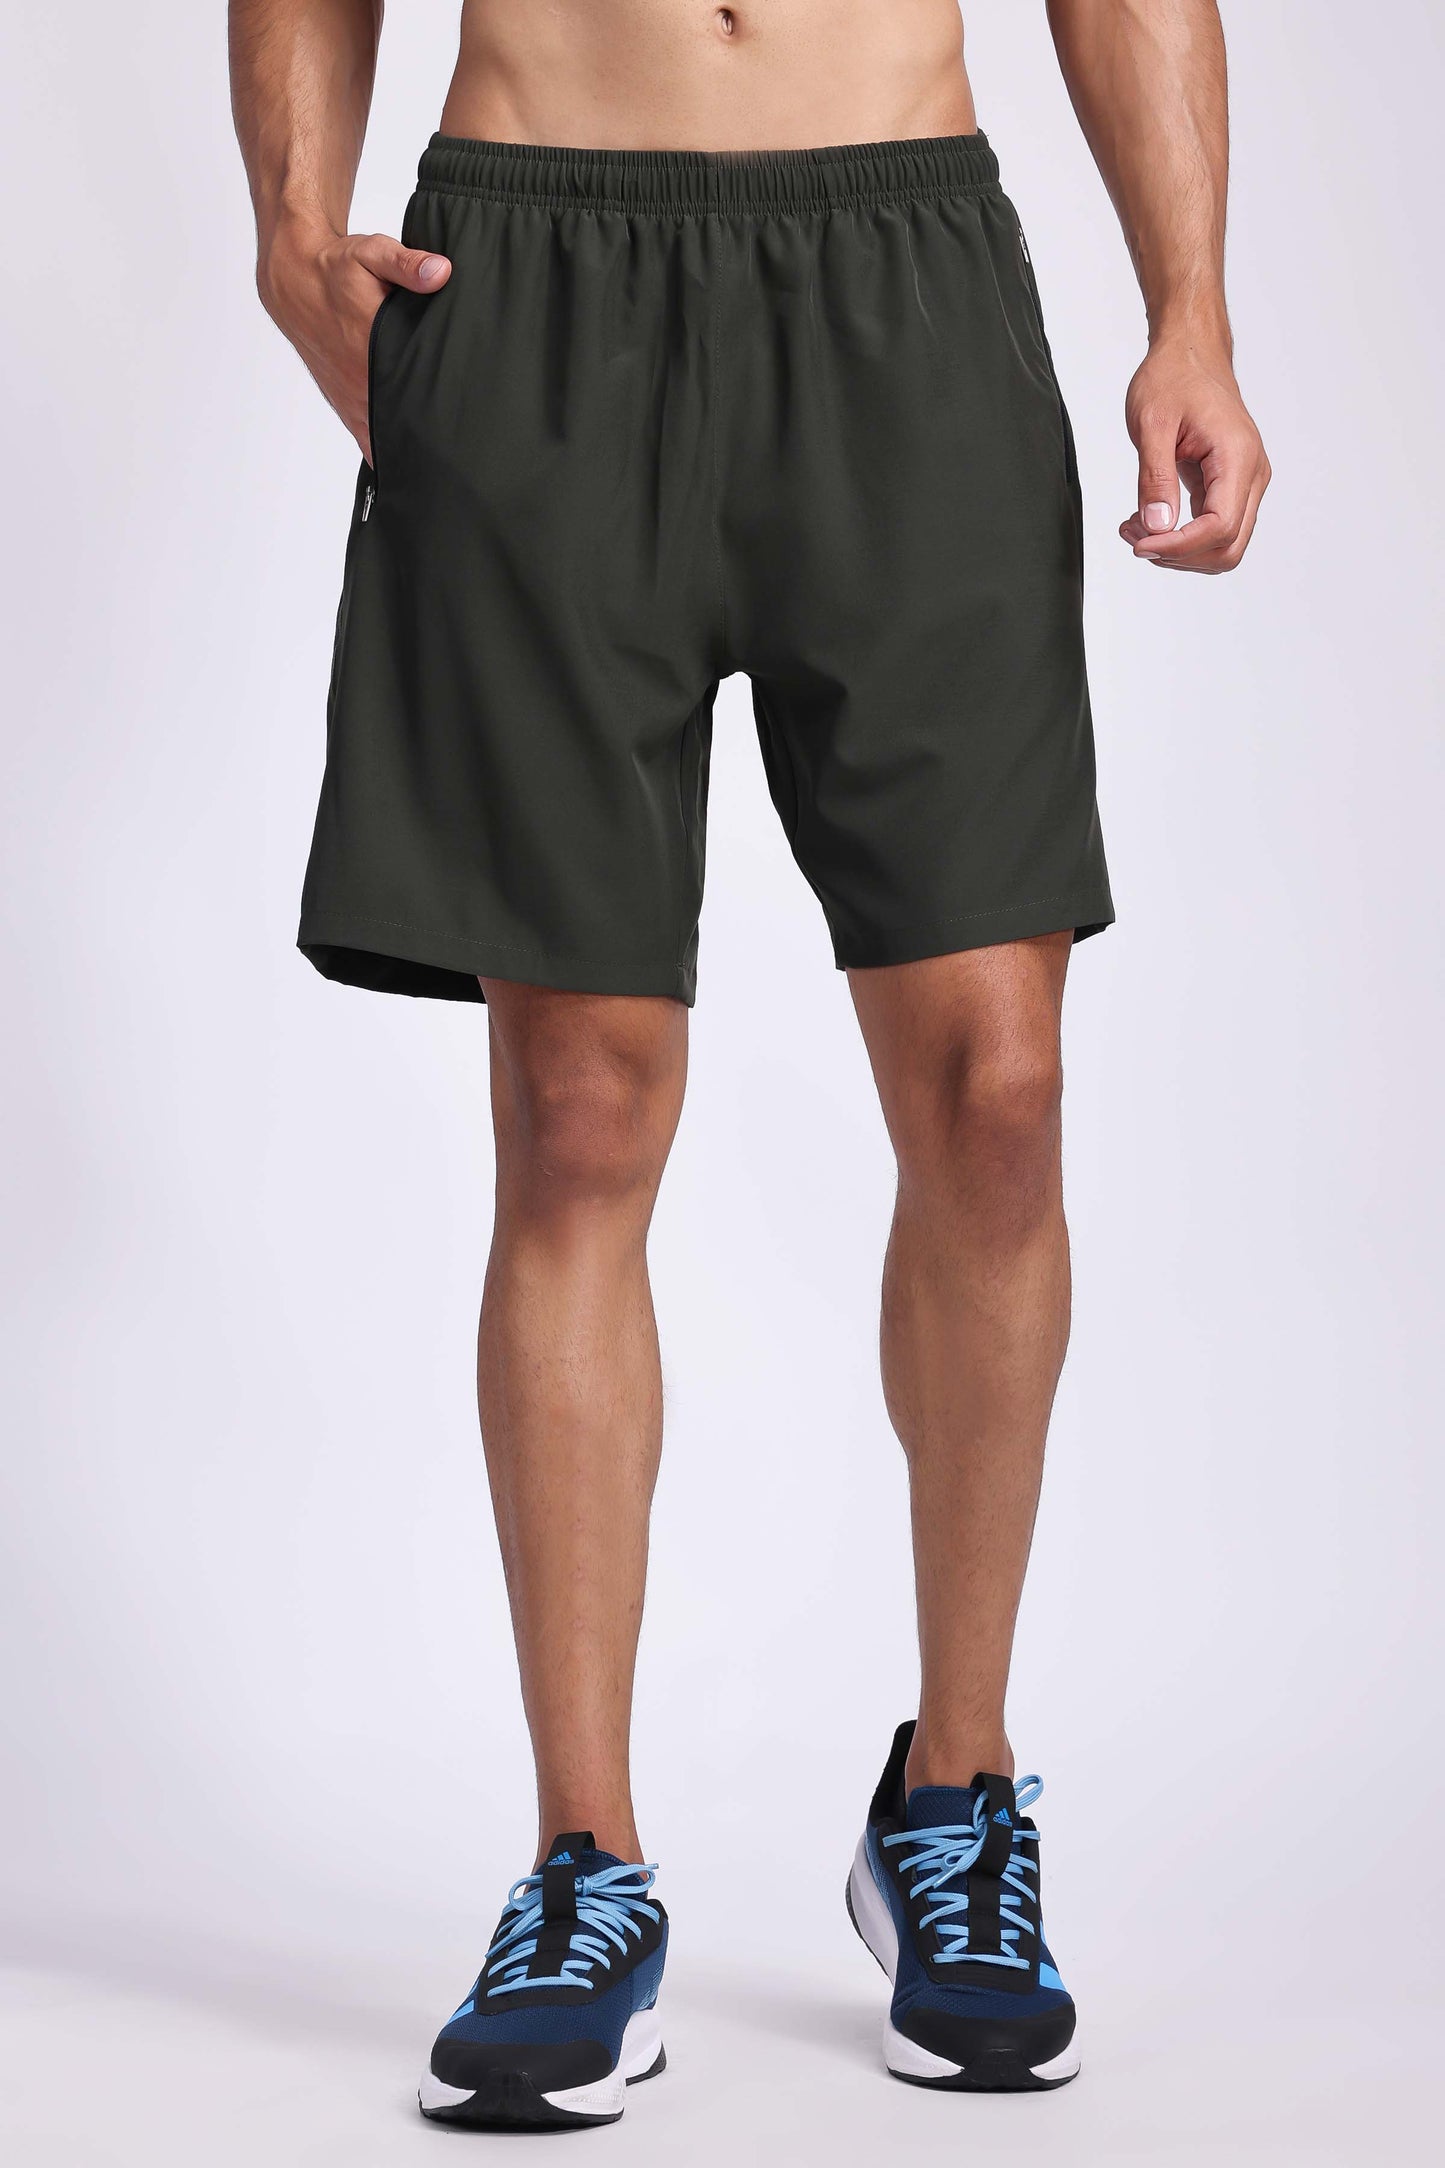 Men's Lycra Training Shorts - Olive